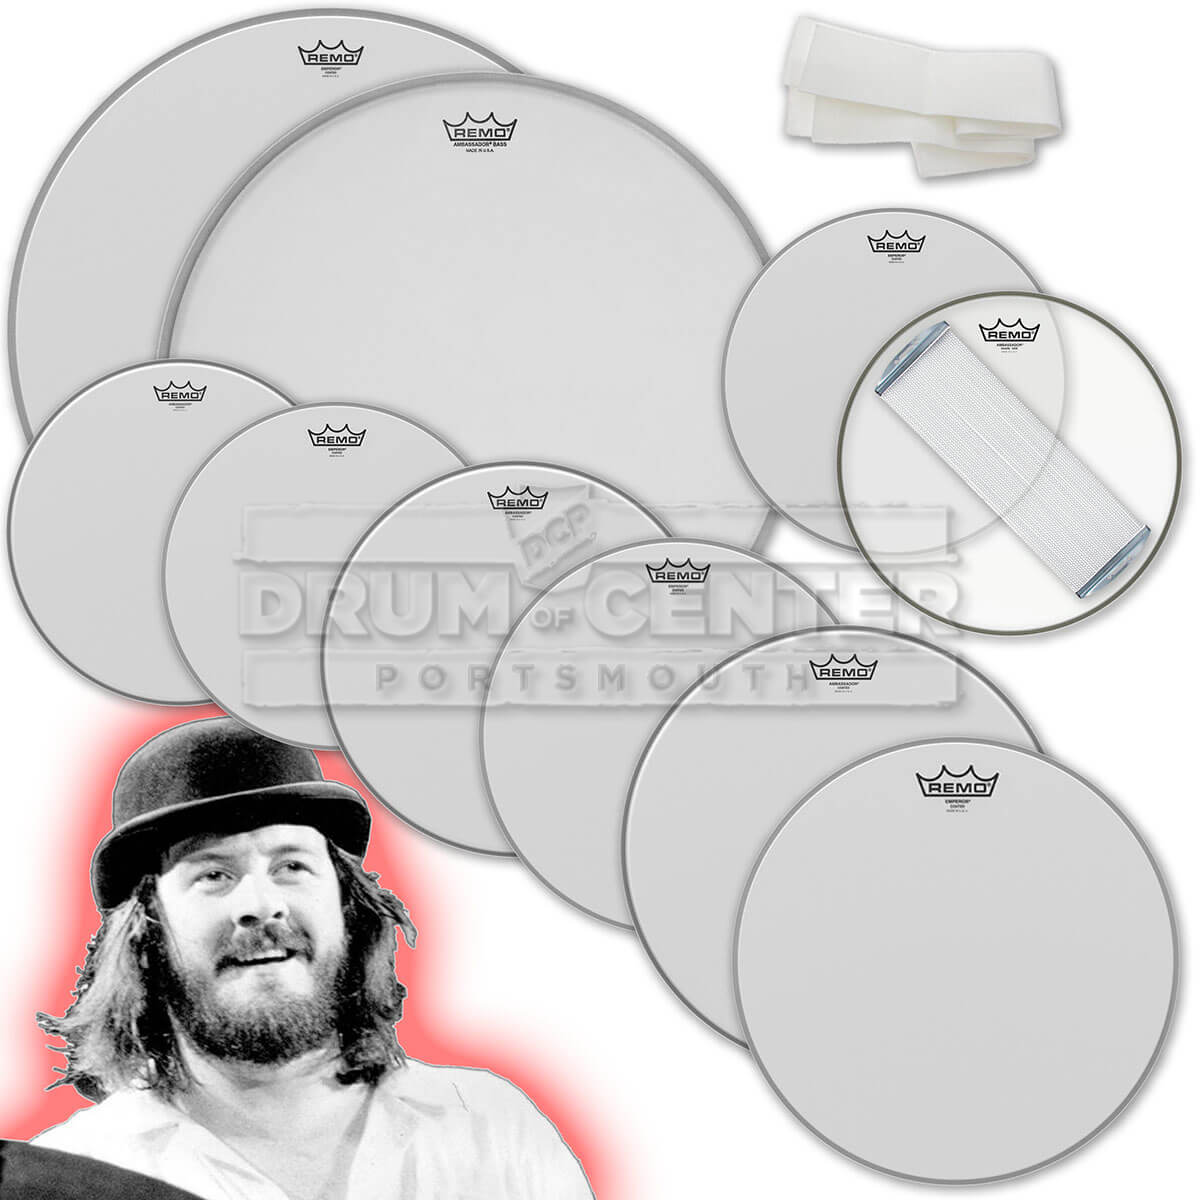 The "Bonzo" Drum Set Upgrade Pack